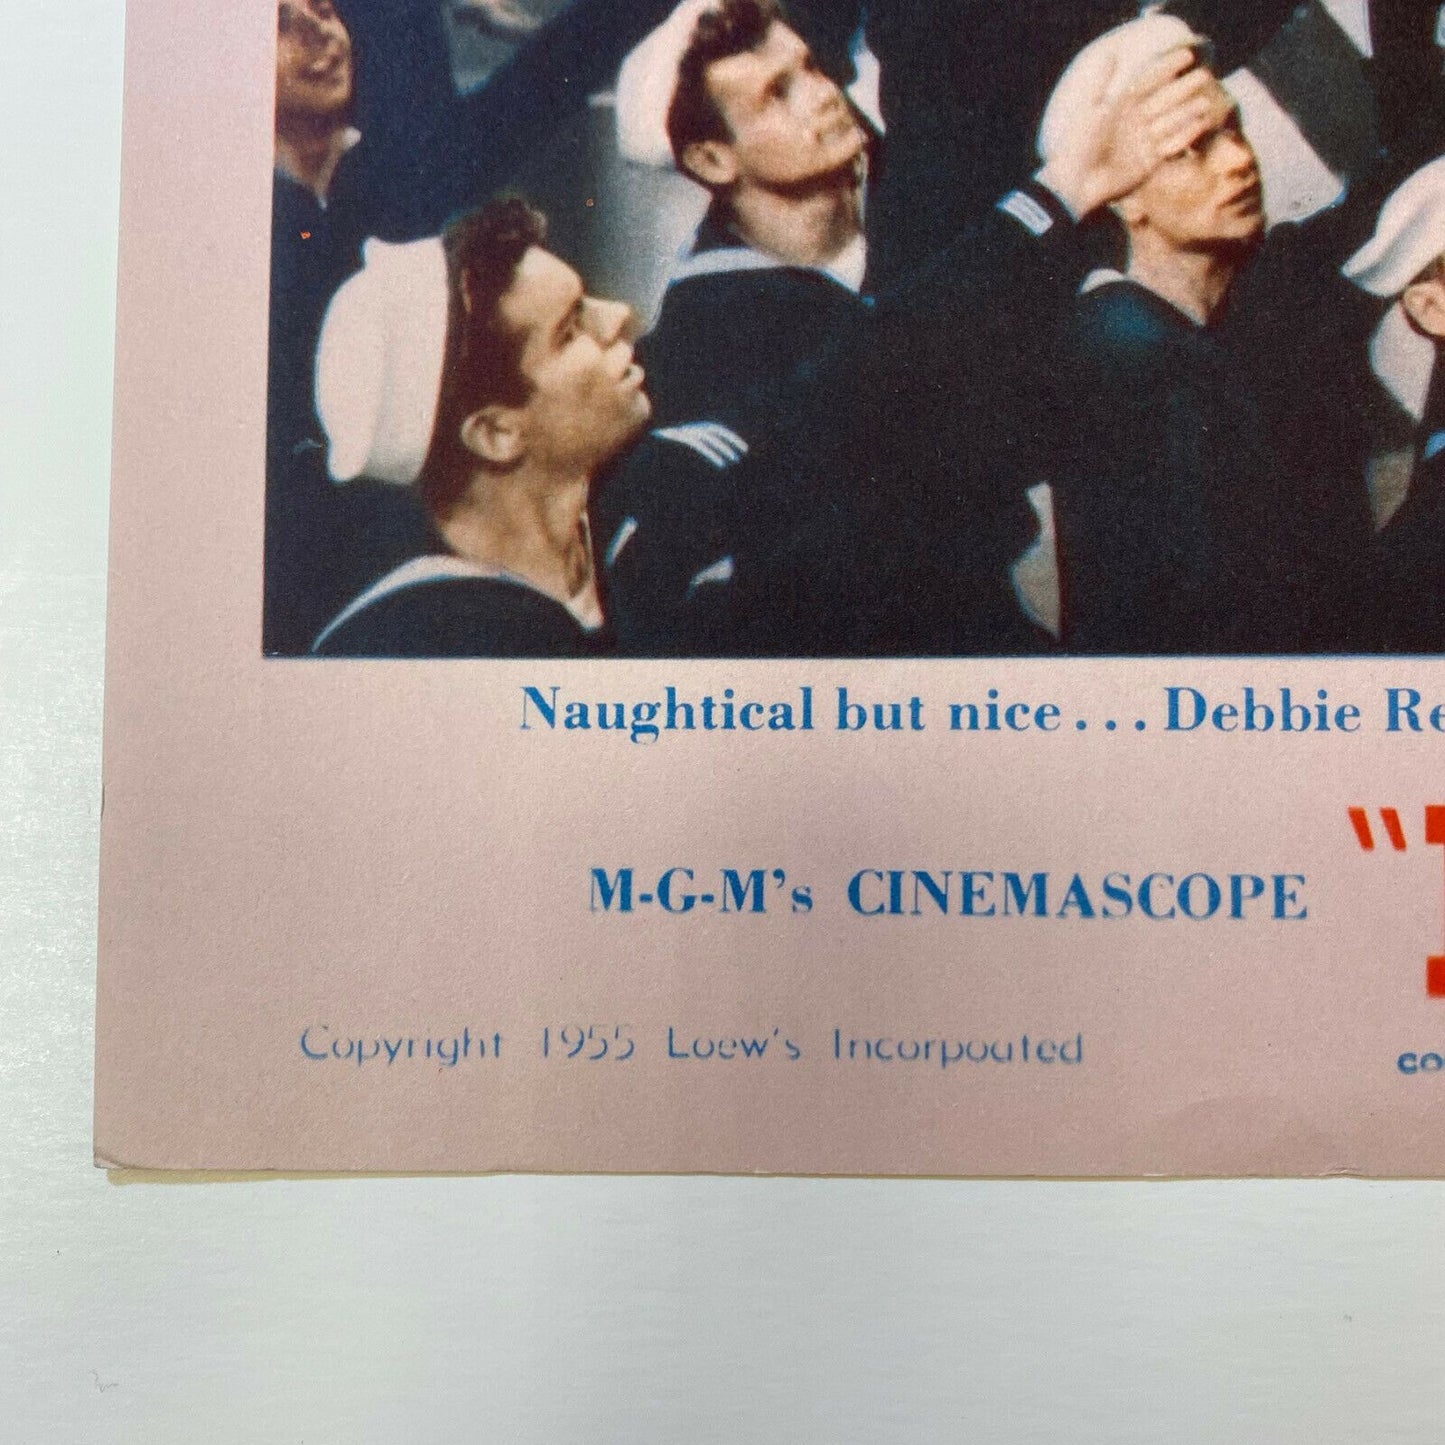 Hit The Deck ORIGINAL 1955 Lobby Card 7 Movie Poster Debbie Reynolds Near MINT